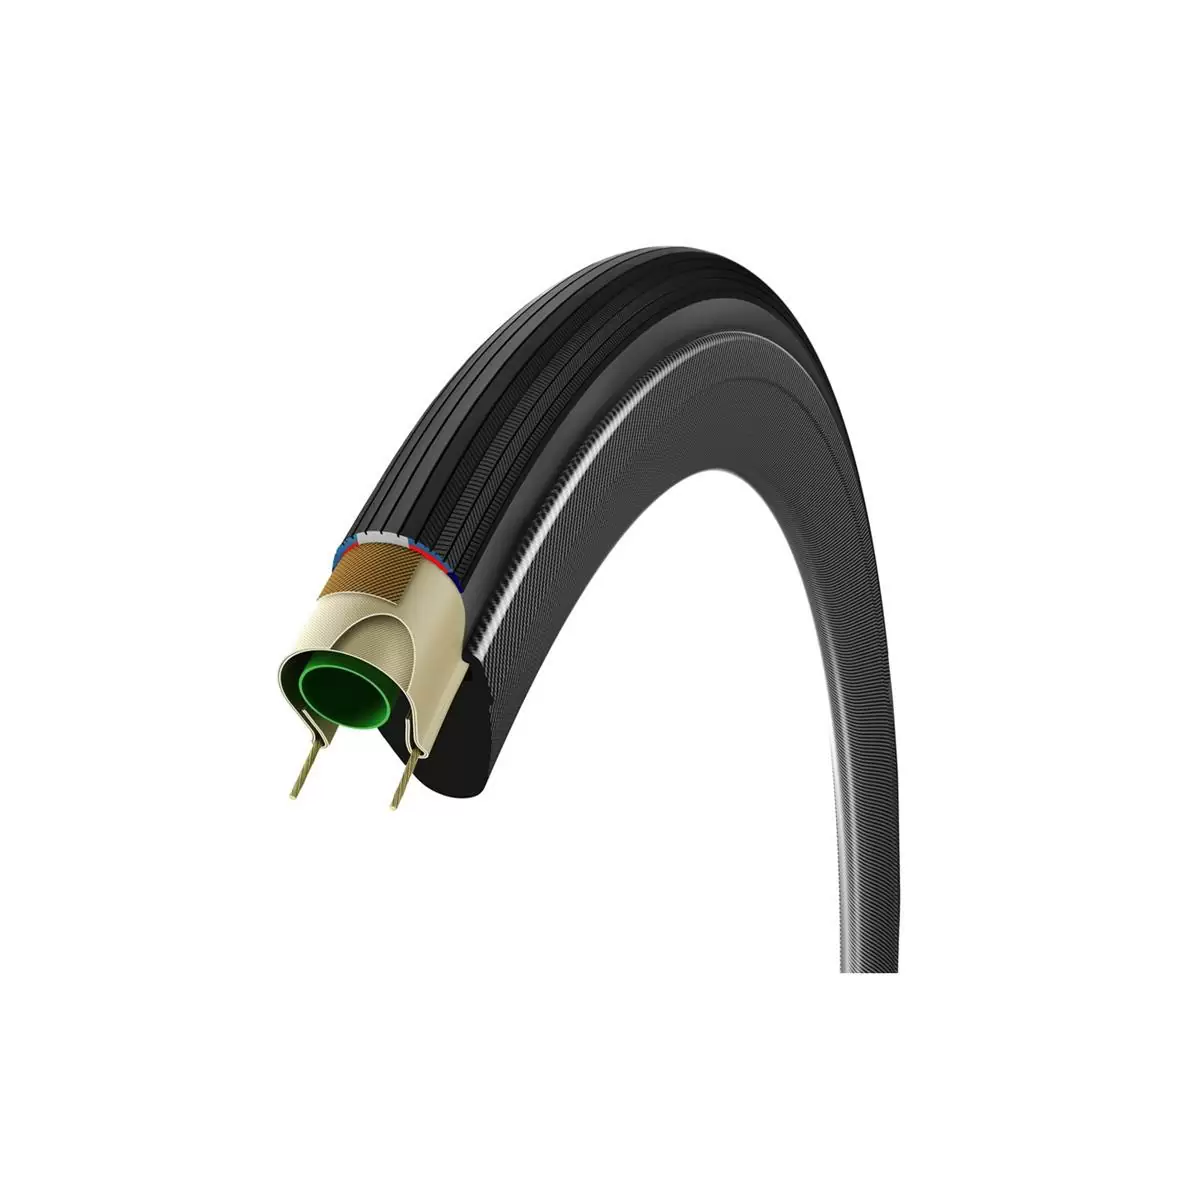 Tire Corsa Control G+ Graphene 700x25c Clincher Folding Black - image